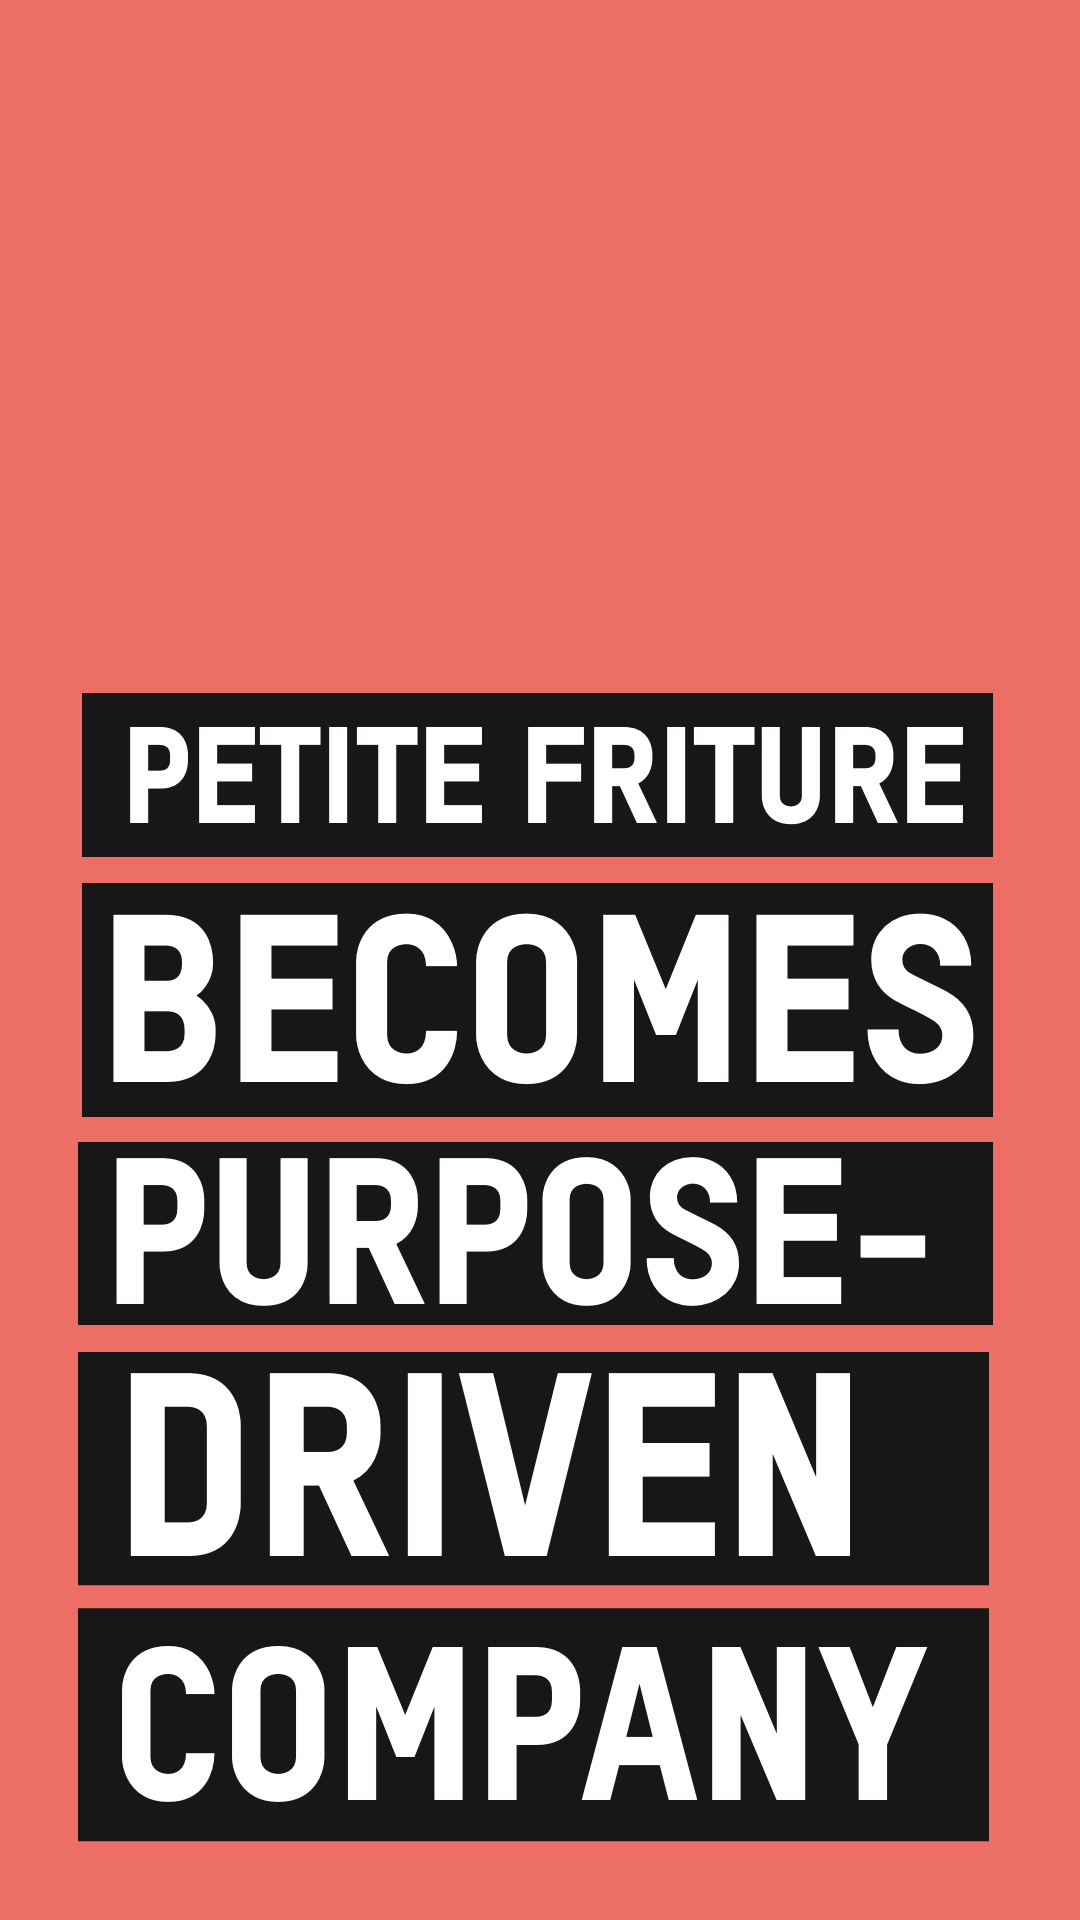 Petite Friture becomes purpose-driven company